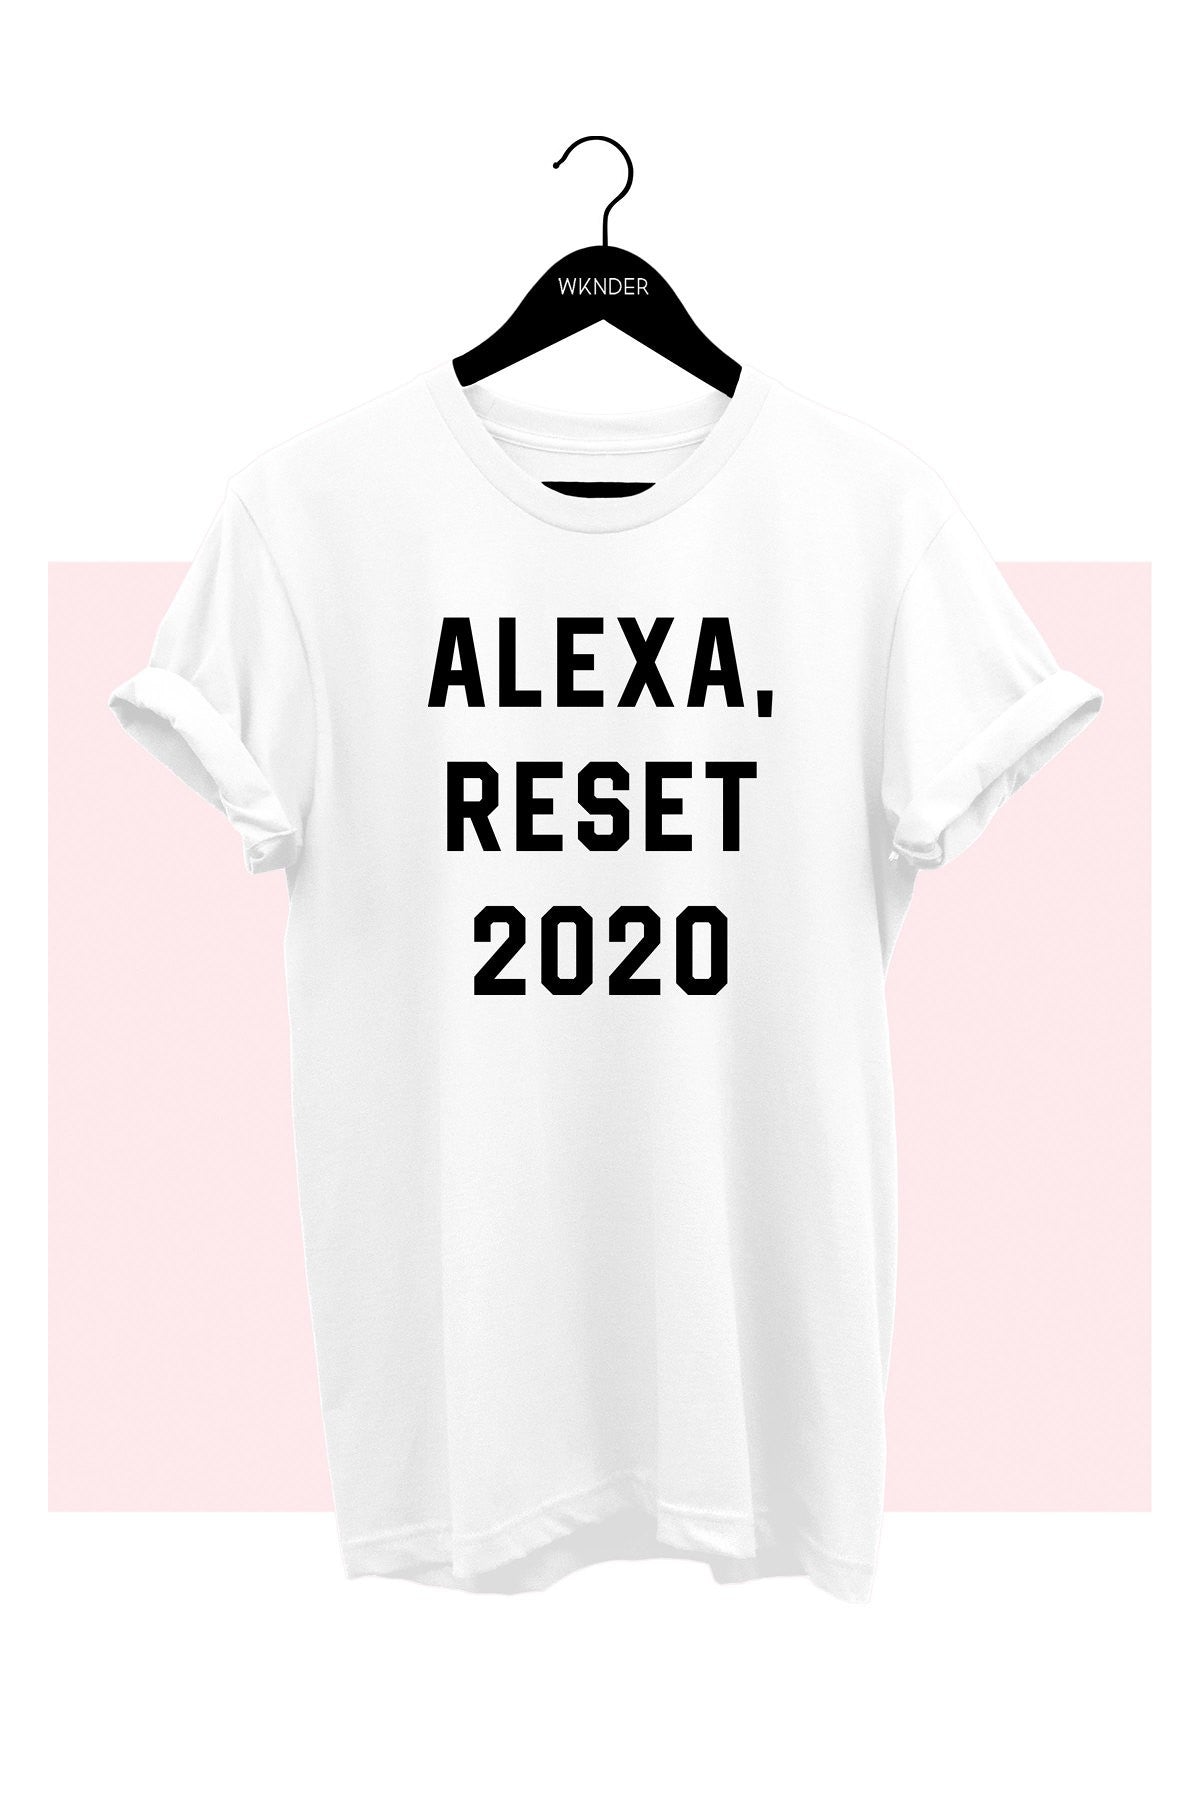 Alexa reset 2020 tshirts